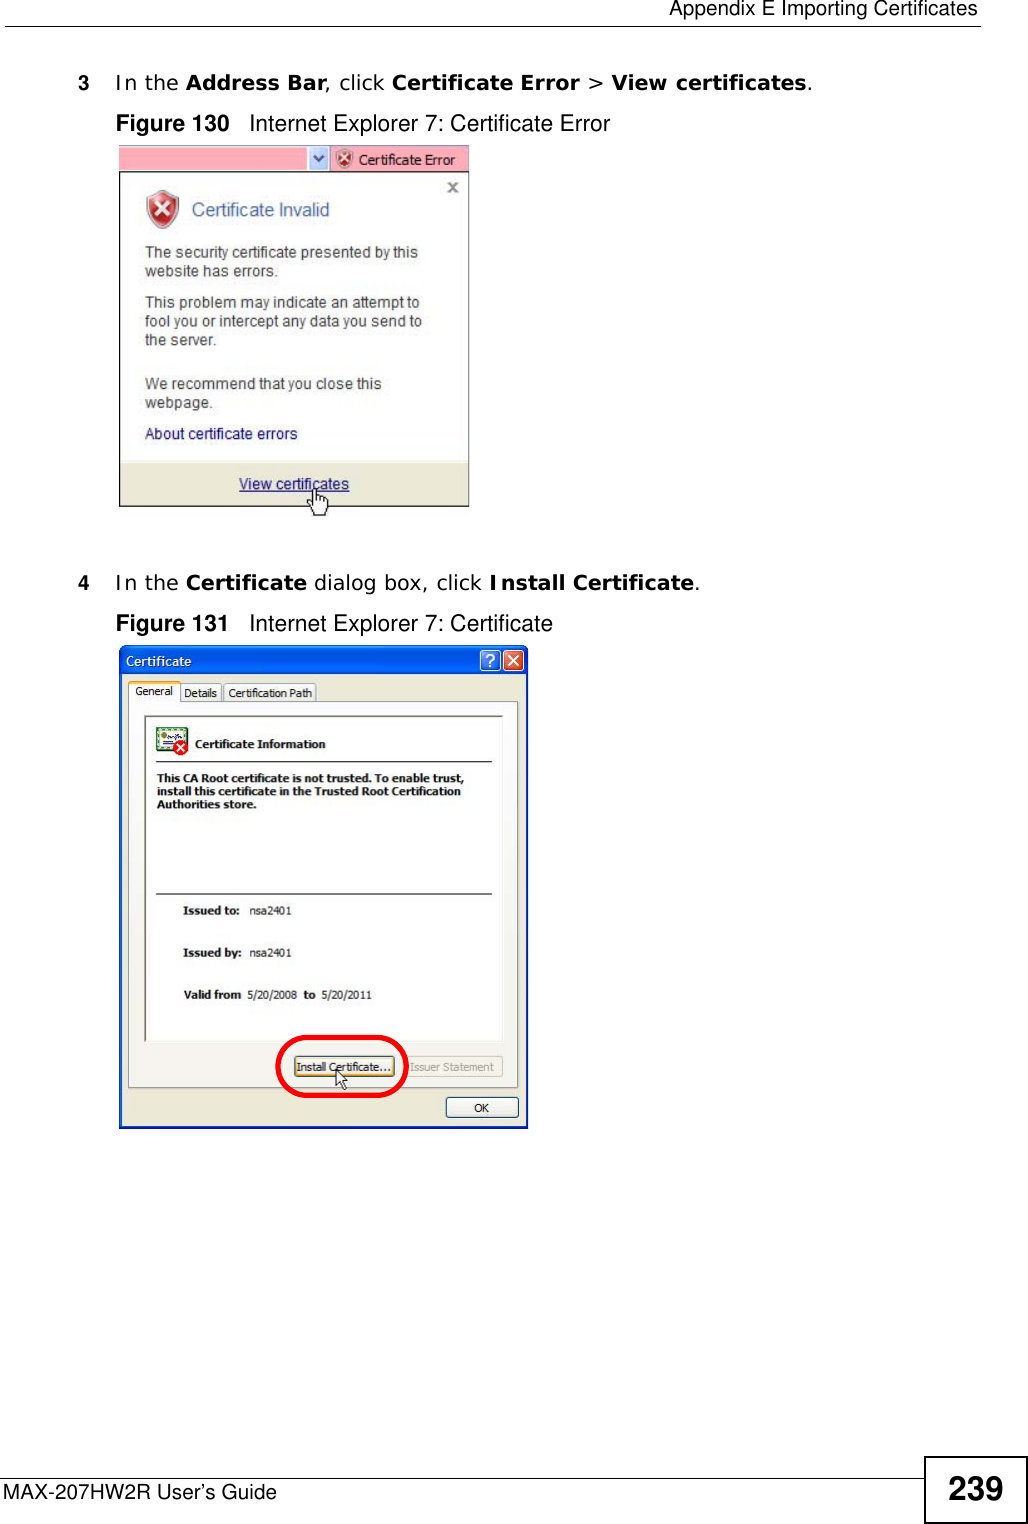  Appendix E Importing CertificatesMAX-207HW2R User’s Guide 2393In the Address Bar, click Certificate Error &gt; View certificates.Figure 130   Internet Explorer 7: Certificate Error4In the Certificate dialog box, click Install Certificate.Figure 131   Internet Explorer 7: Certificate